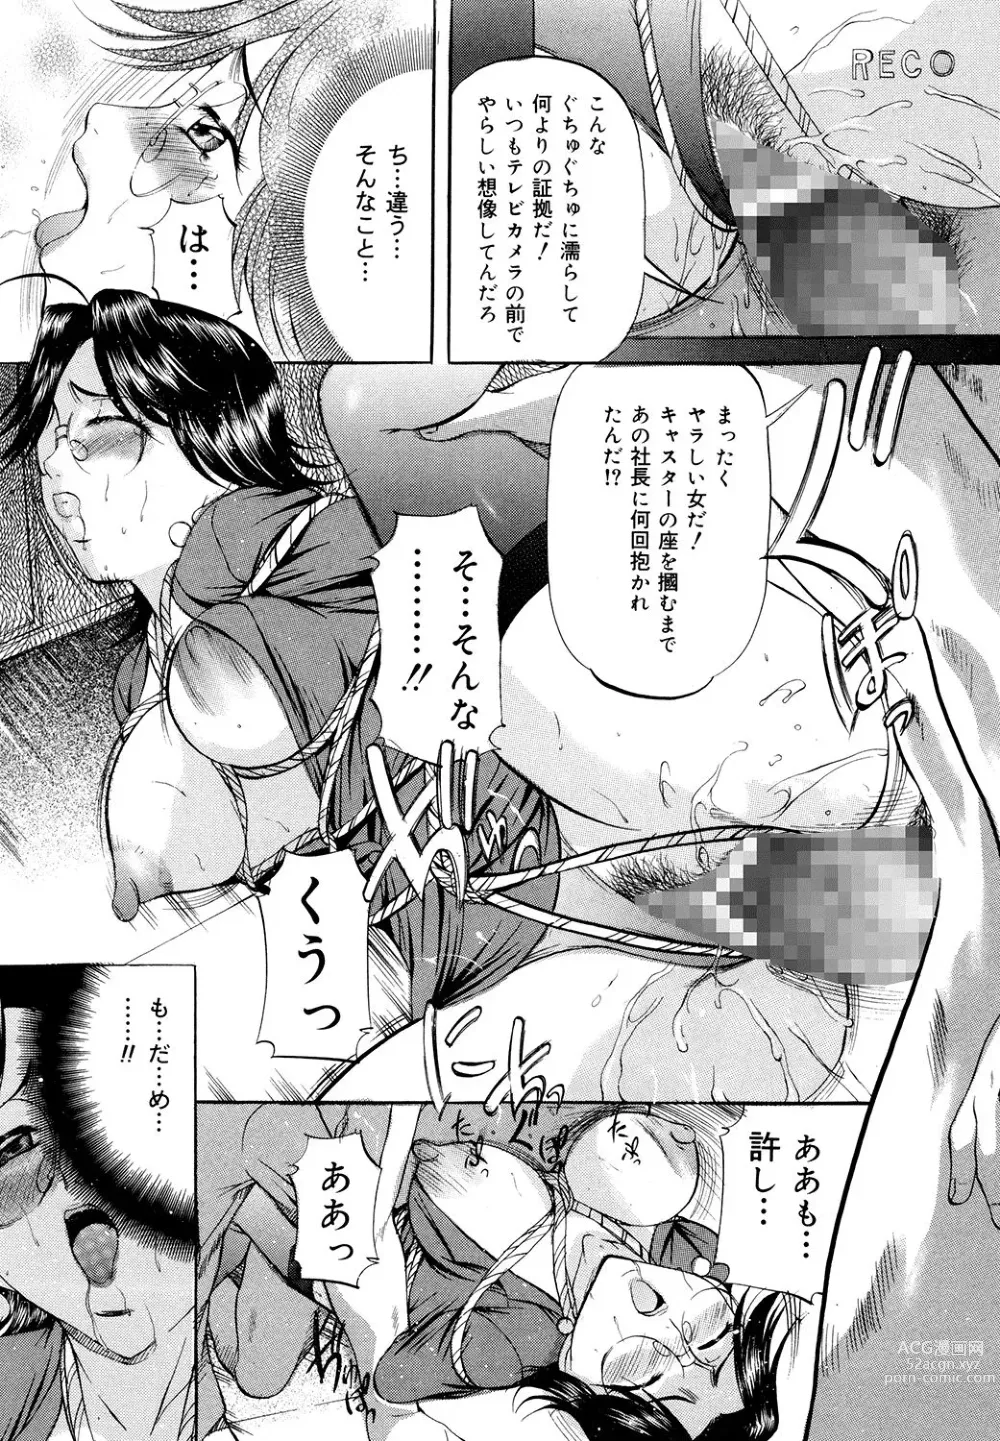 Page 157 of manga Kyonyuu Korogashi